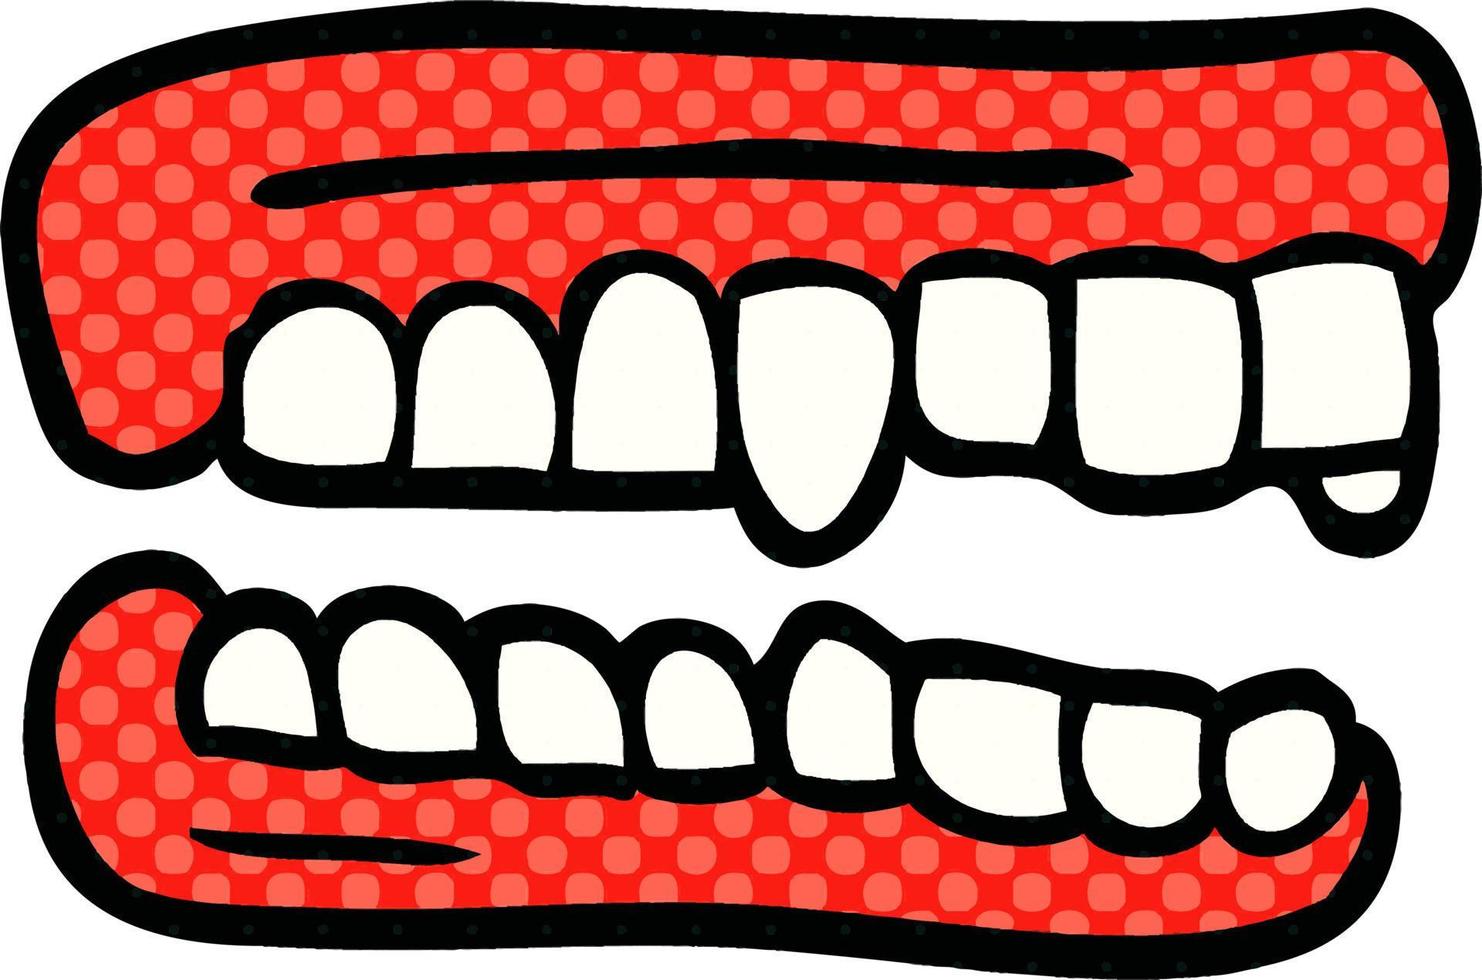 Cartoon-Doodle falsche Zähne vektor